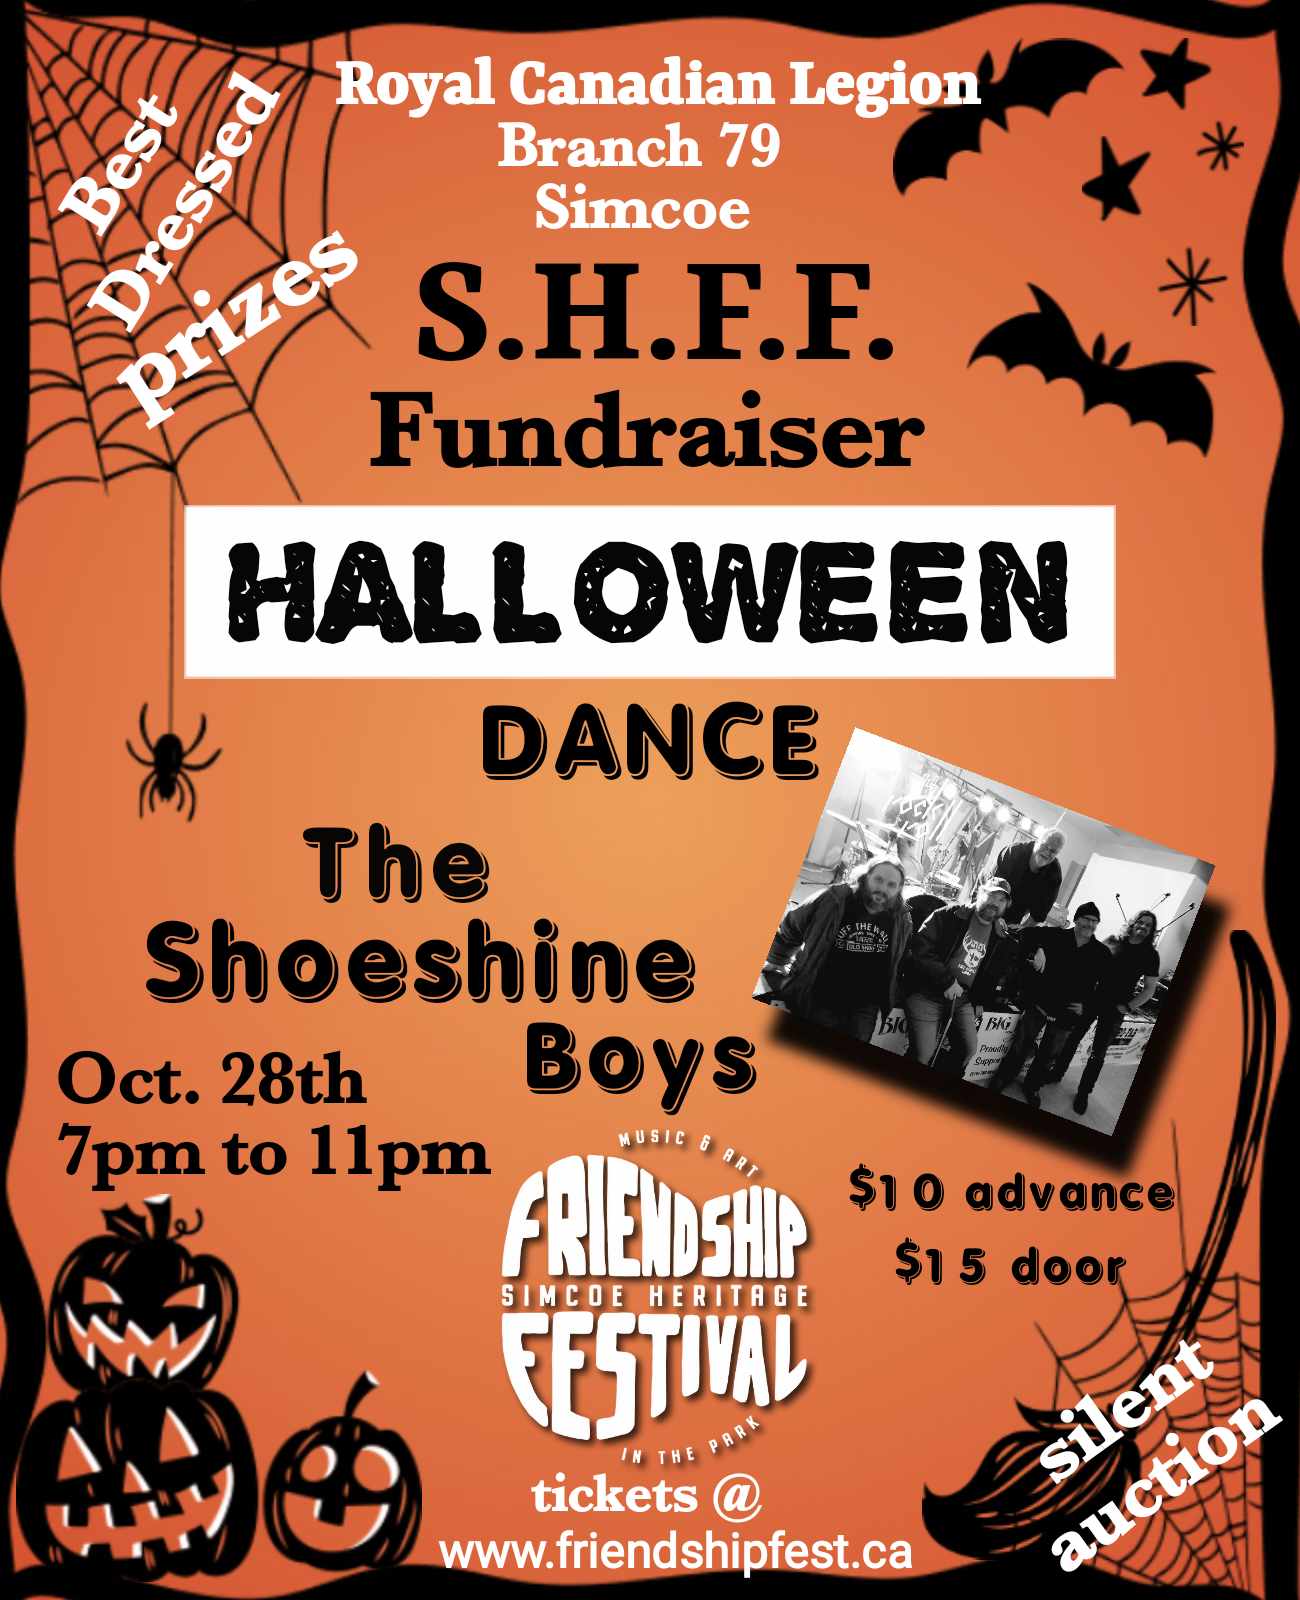 Friendship Fest Halloween Dance FUNdraiser!